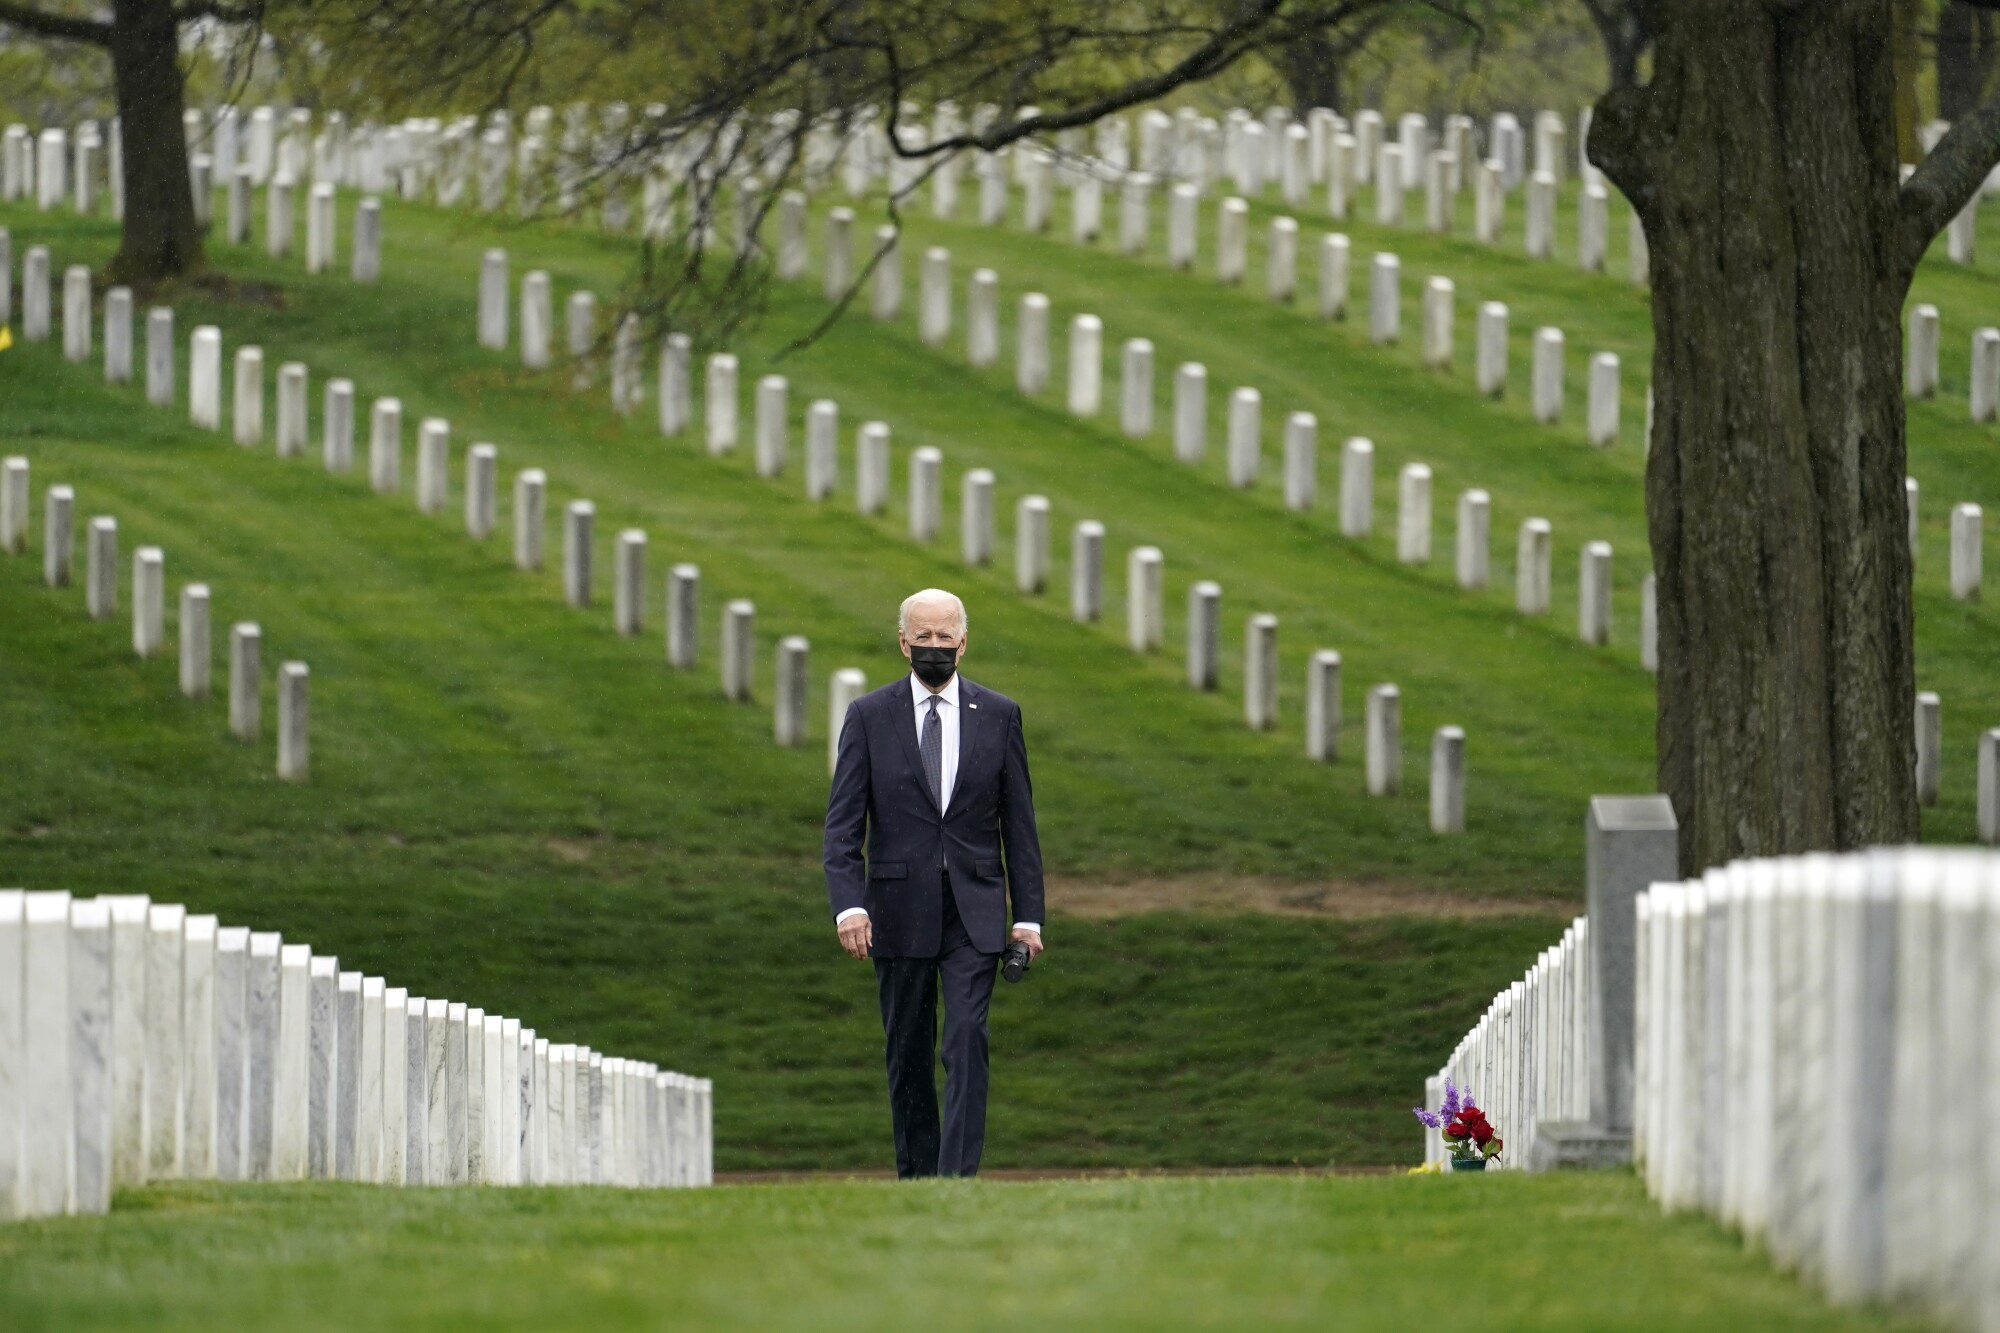 President Biden walks in Arlington National Cemetery